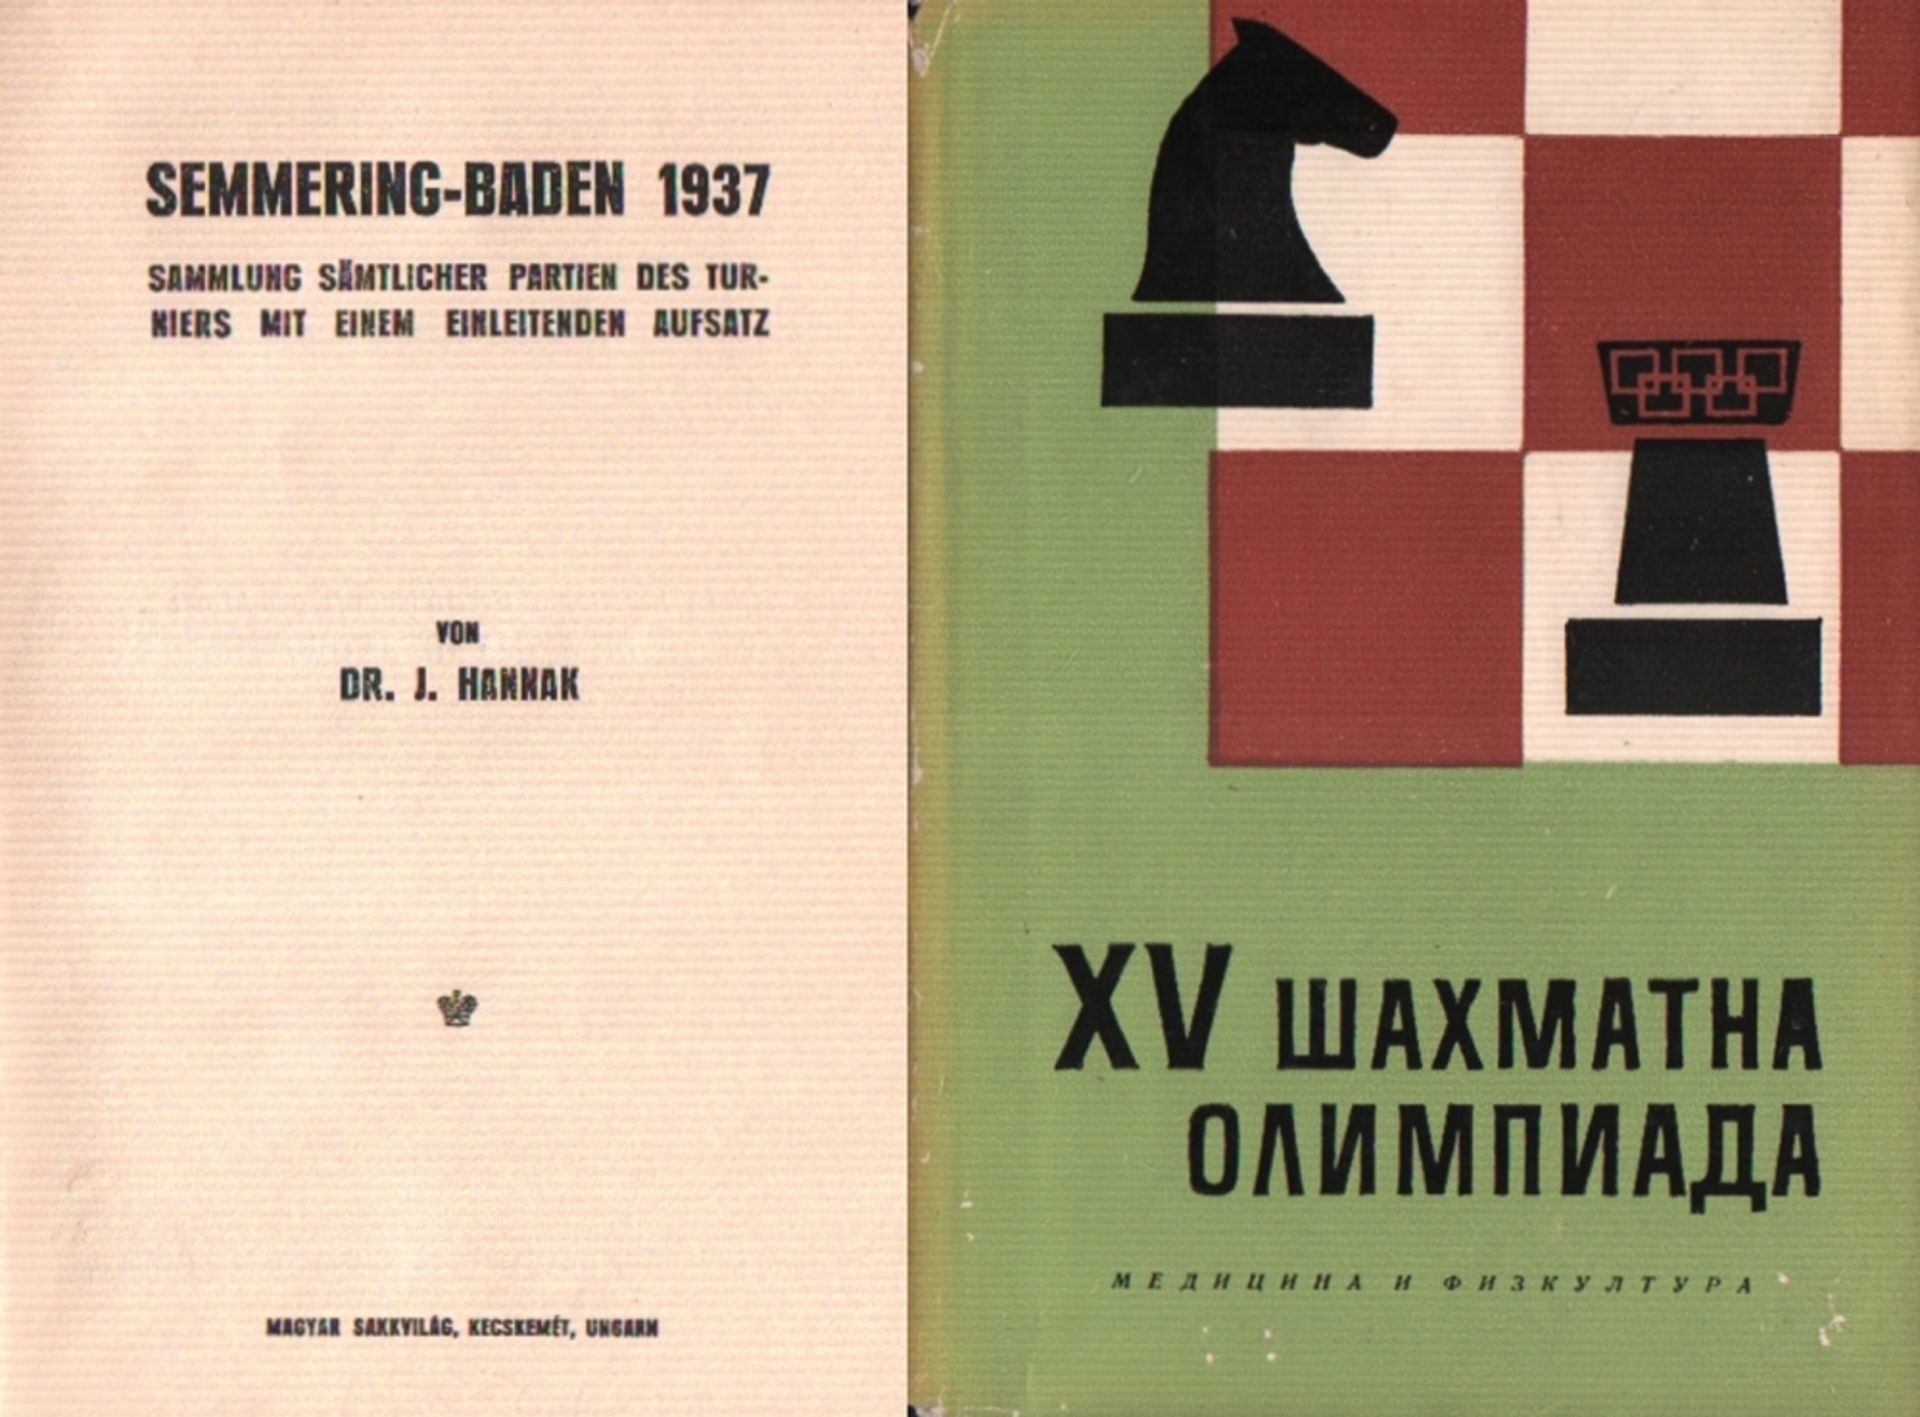 Semmering - Baden 1937. Hannak, J. Semmering - Baden 1937. Sammlung sämtlicher Partien des